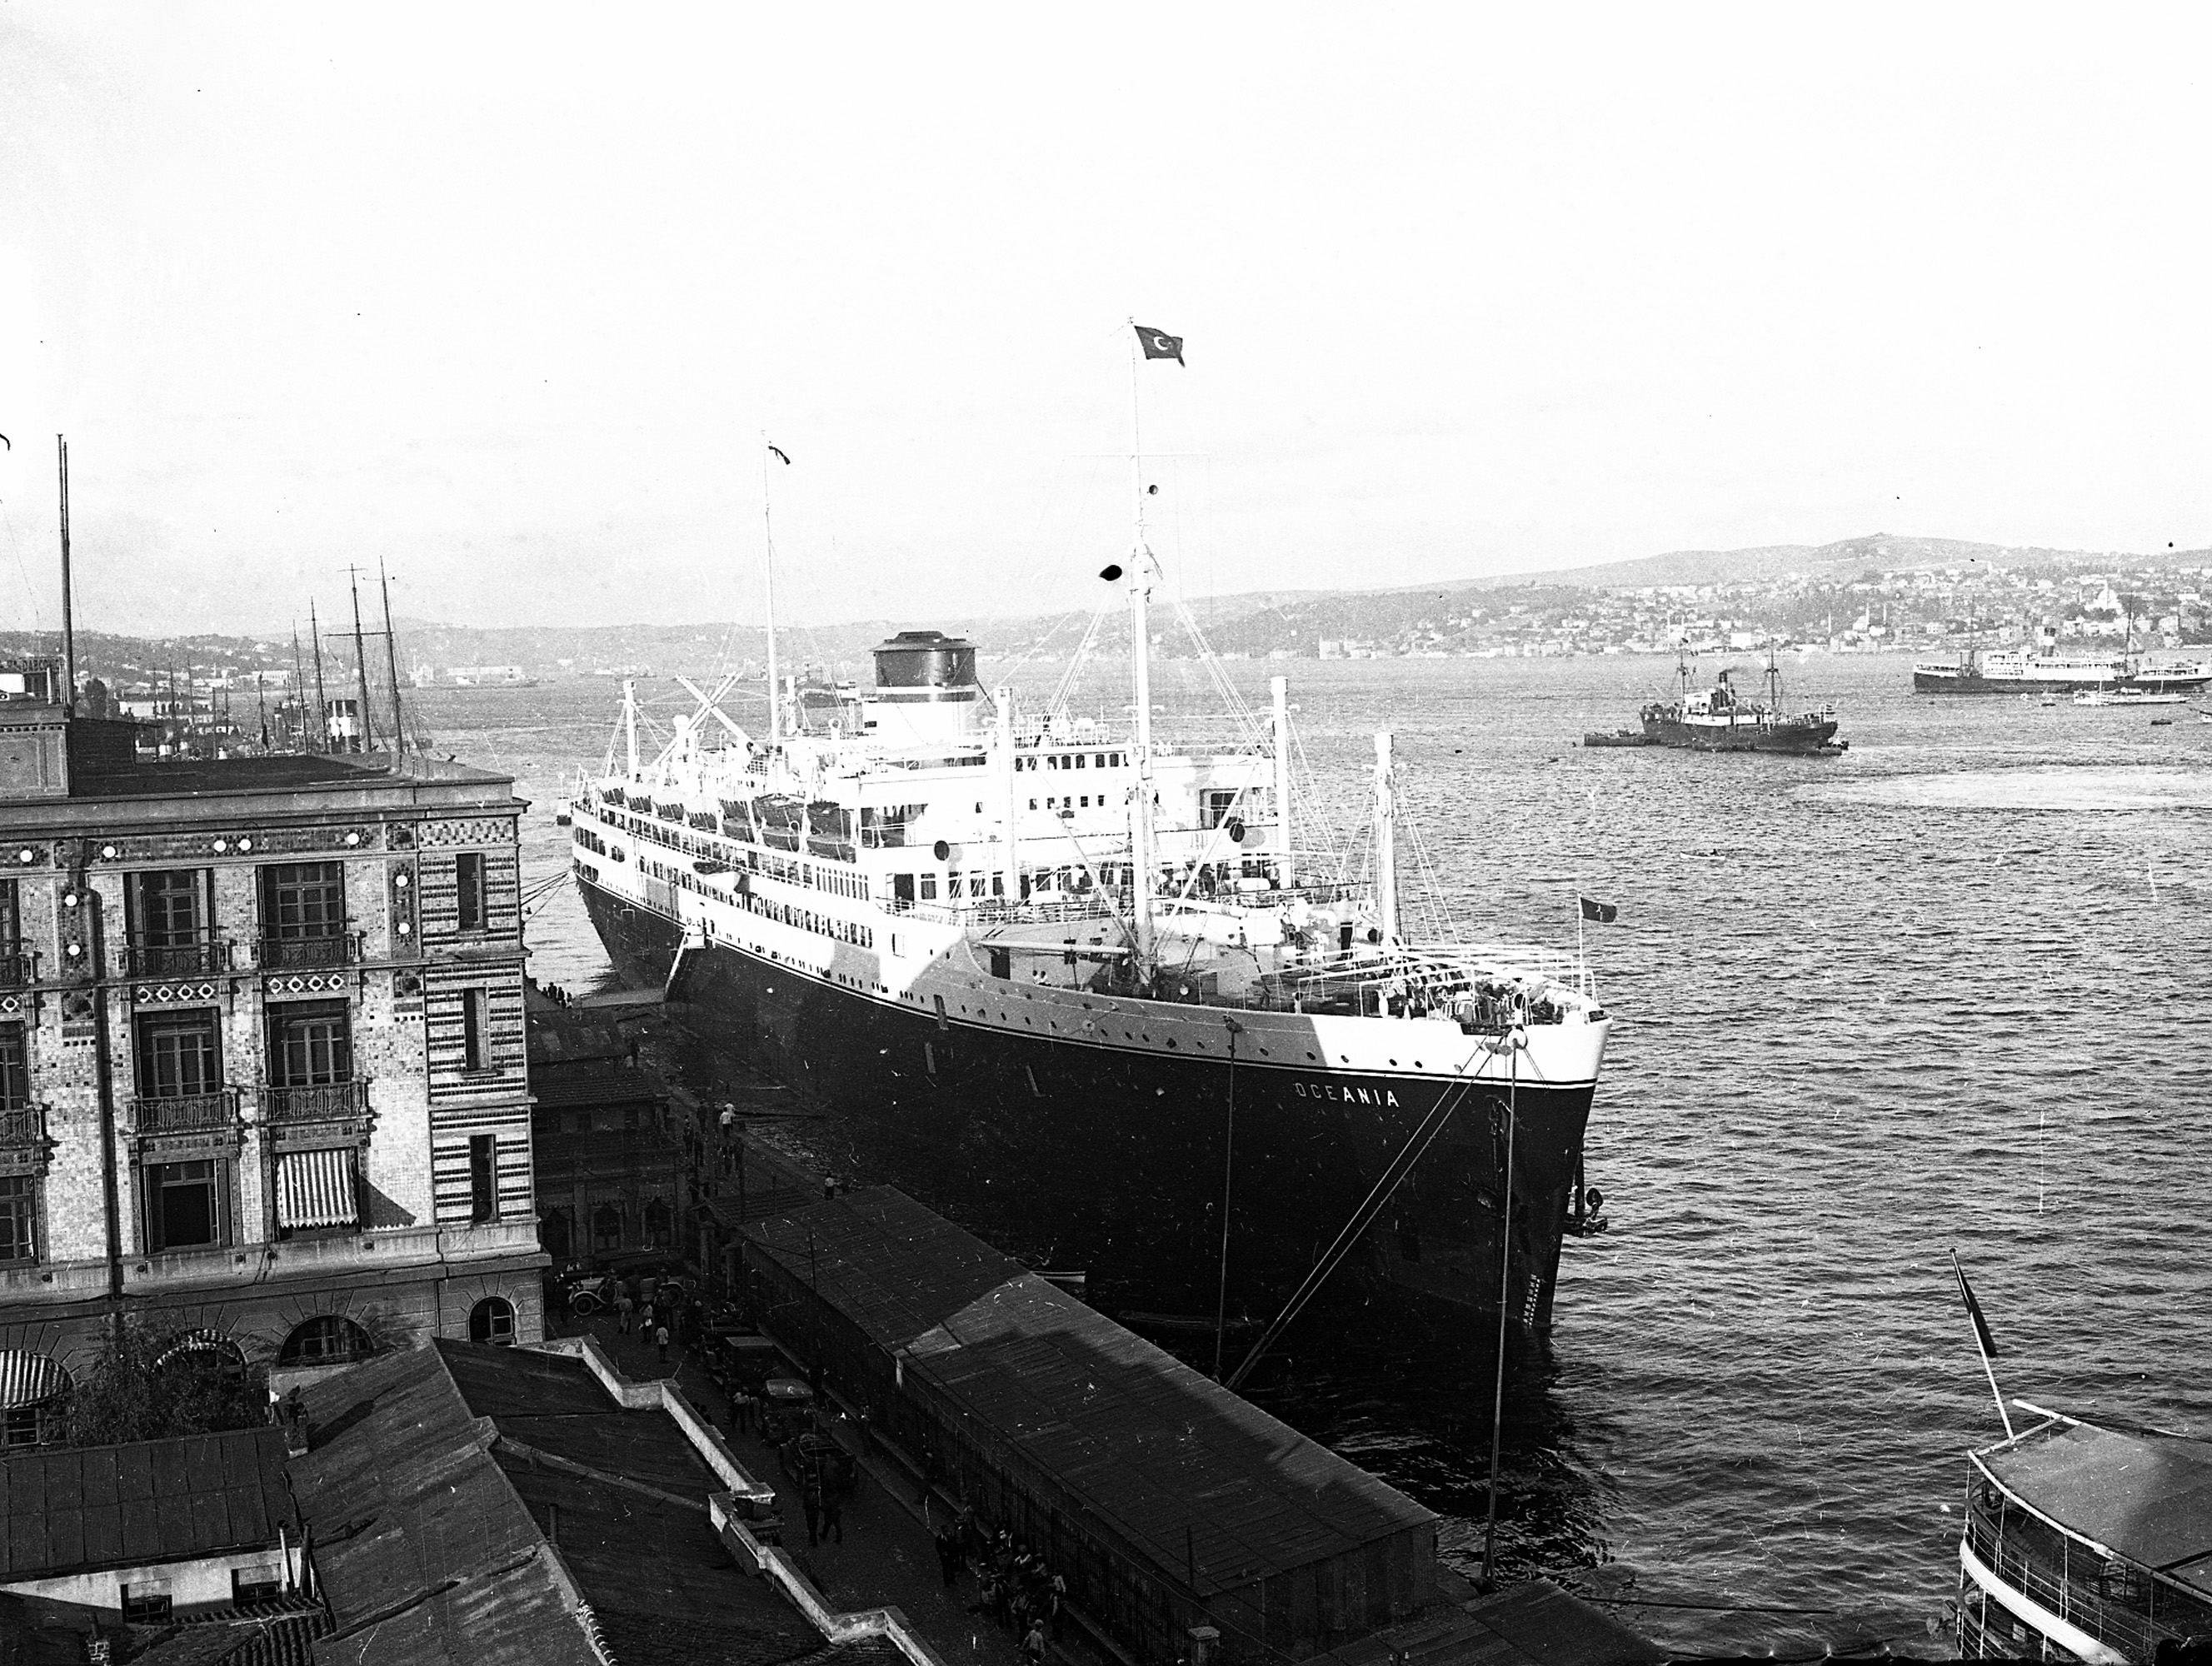 Oceania cruise ship at Karaköy pier.